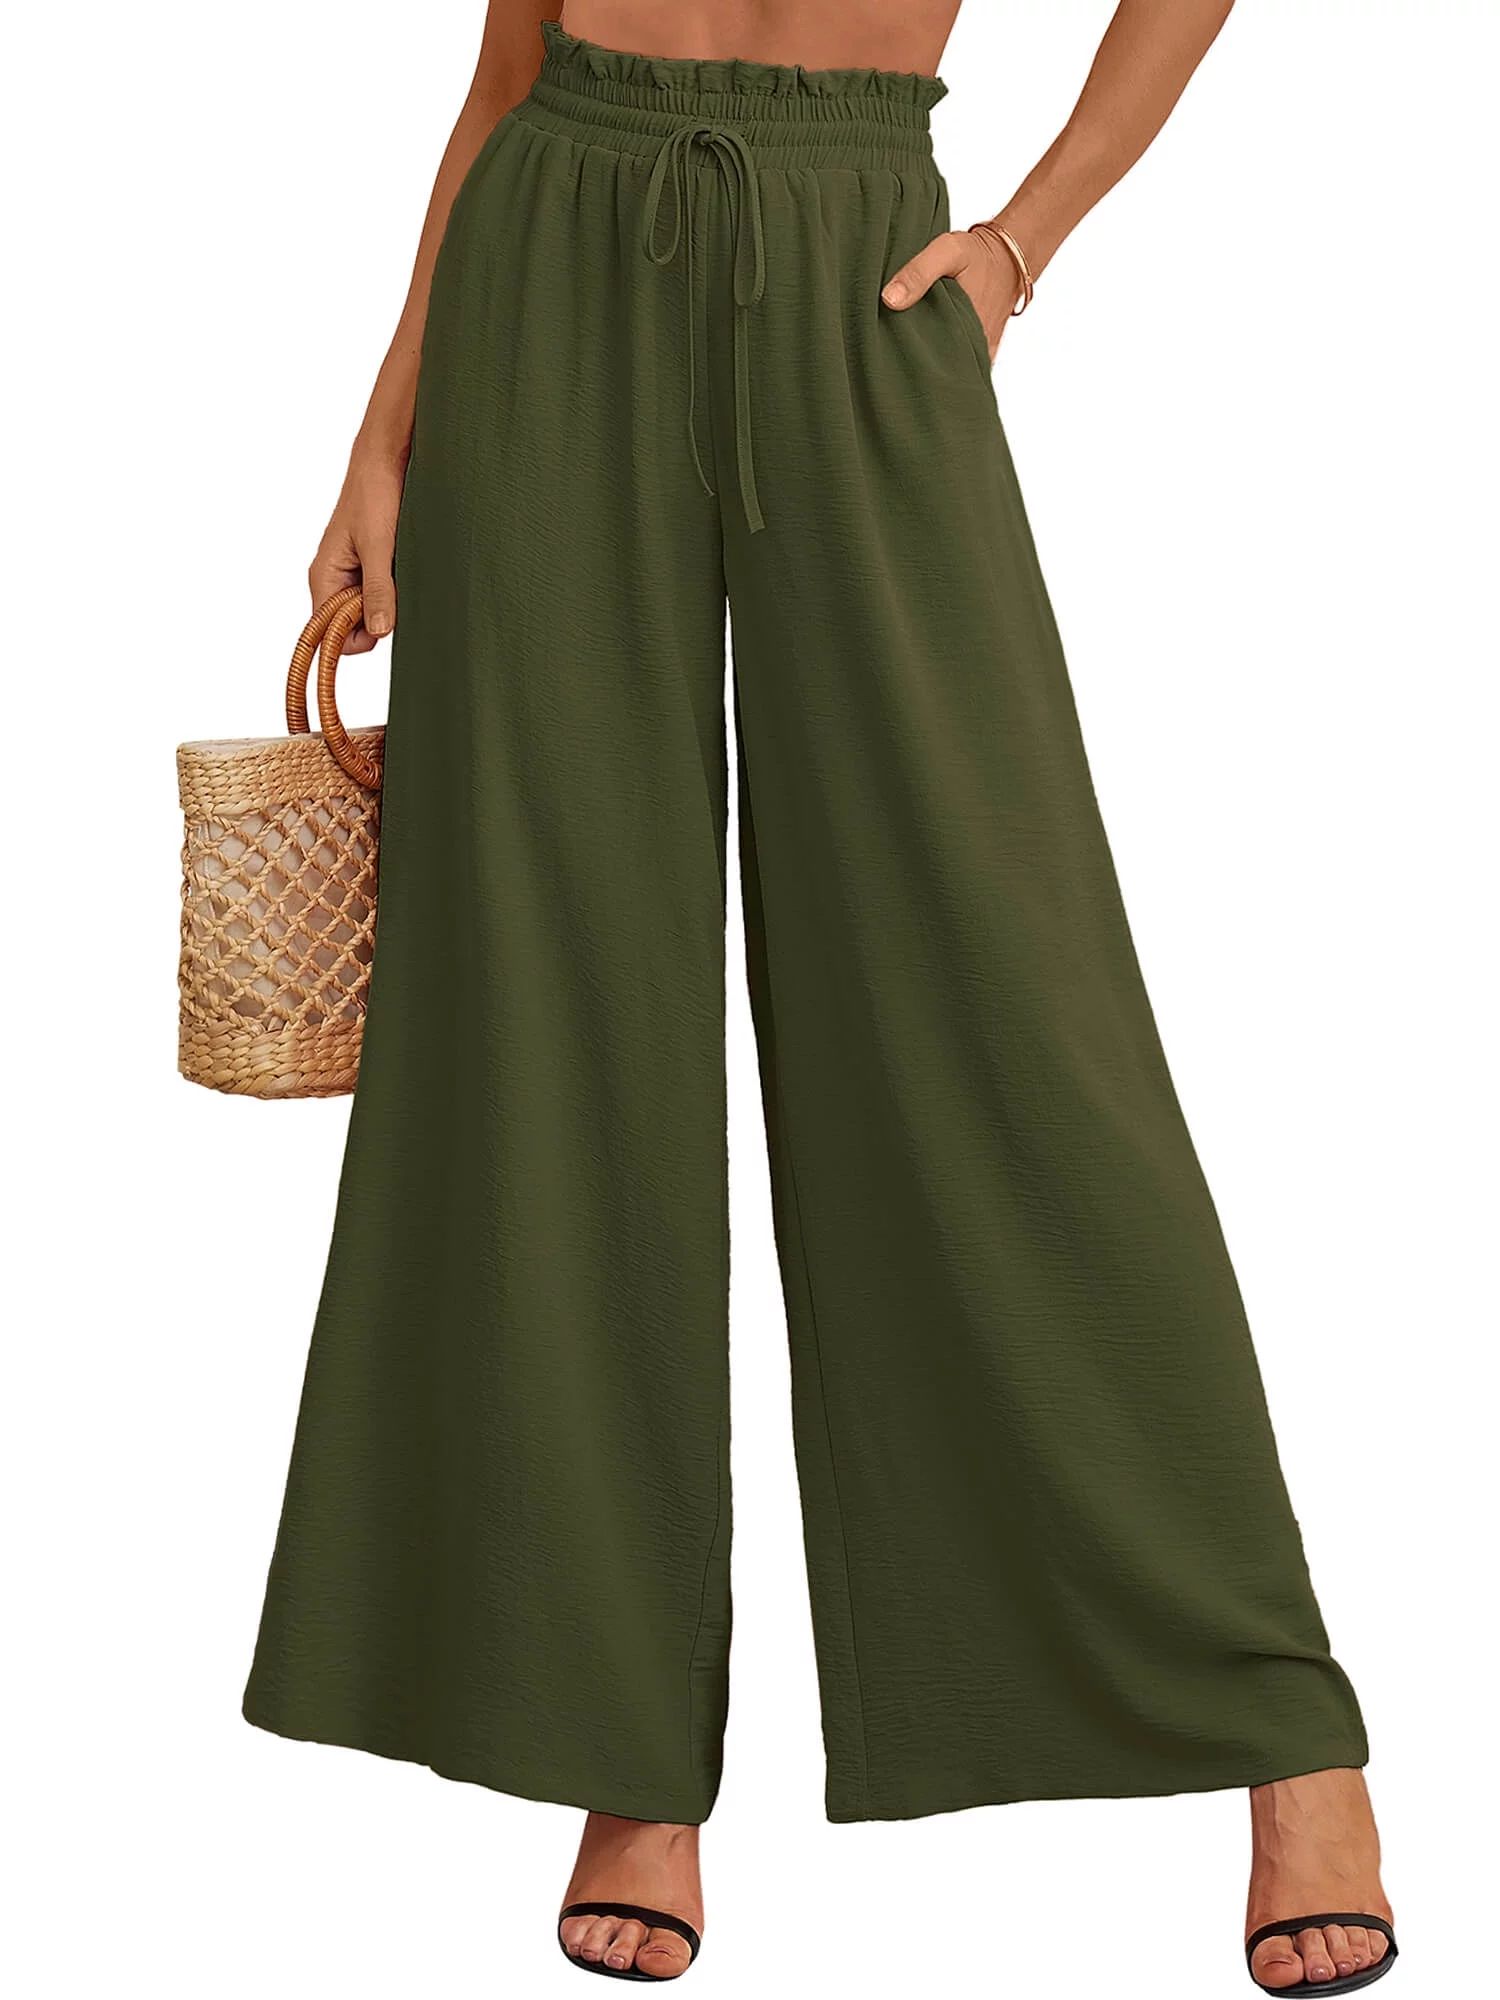 SHOWMALL Women's Pants Casual Elastic Waist Wide Leg Pants Olive S Palazzo Pants with Pockets | Walmart (US)